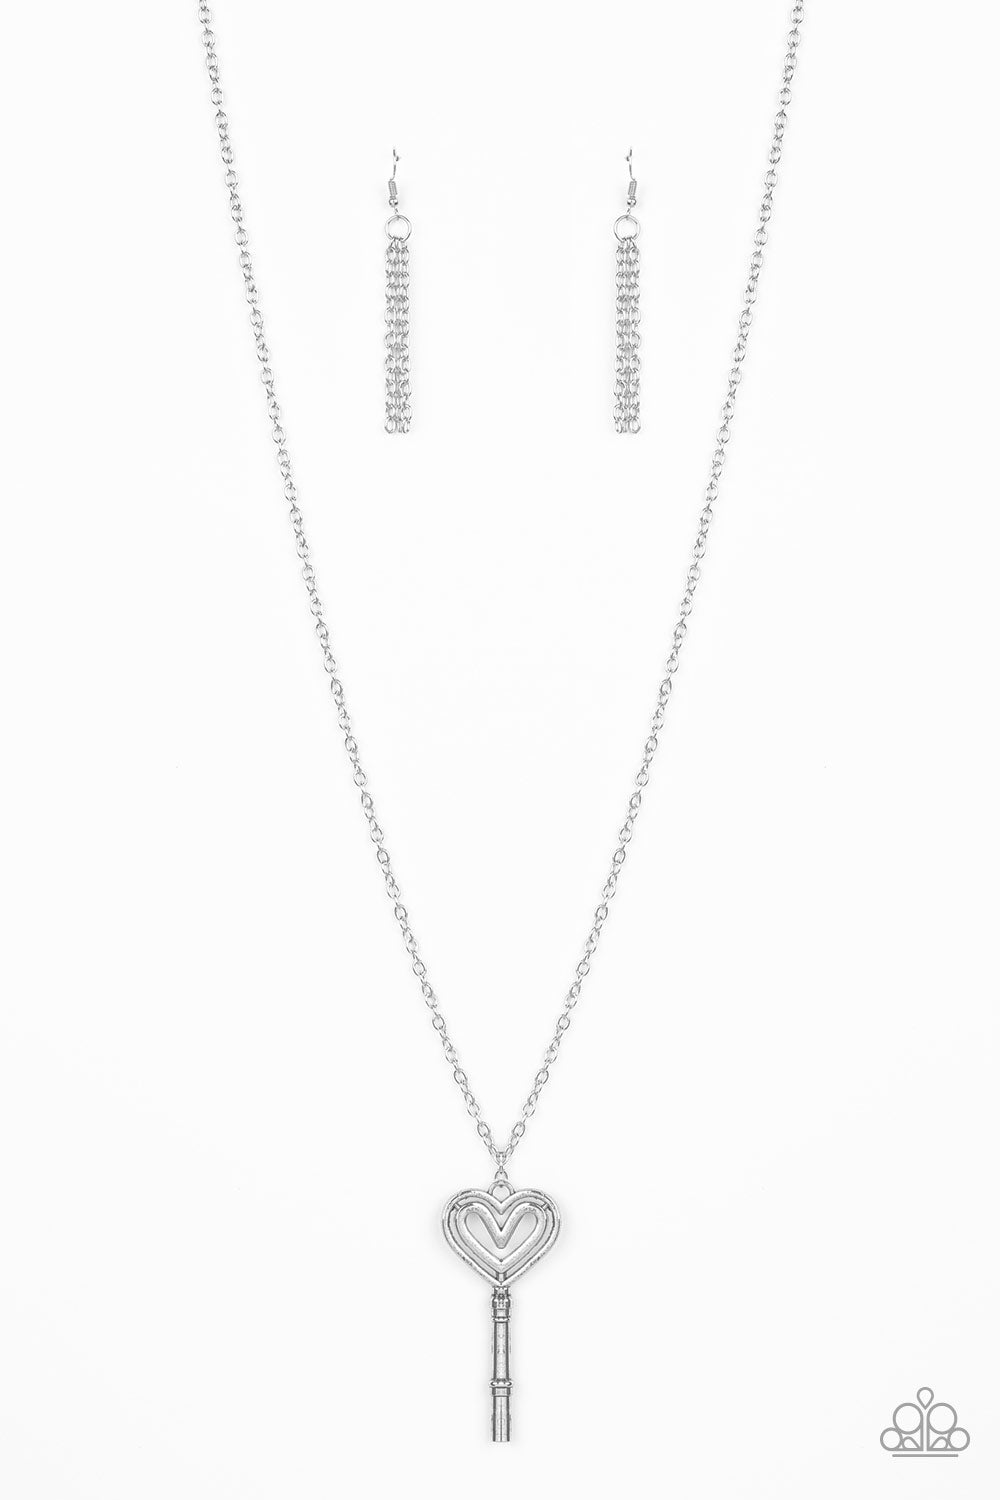 Unlock My Heart - silver - Paparazzi necklace